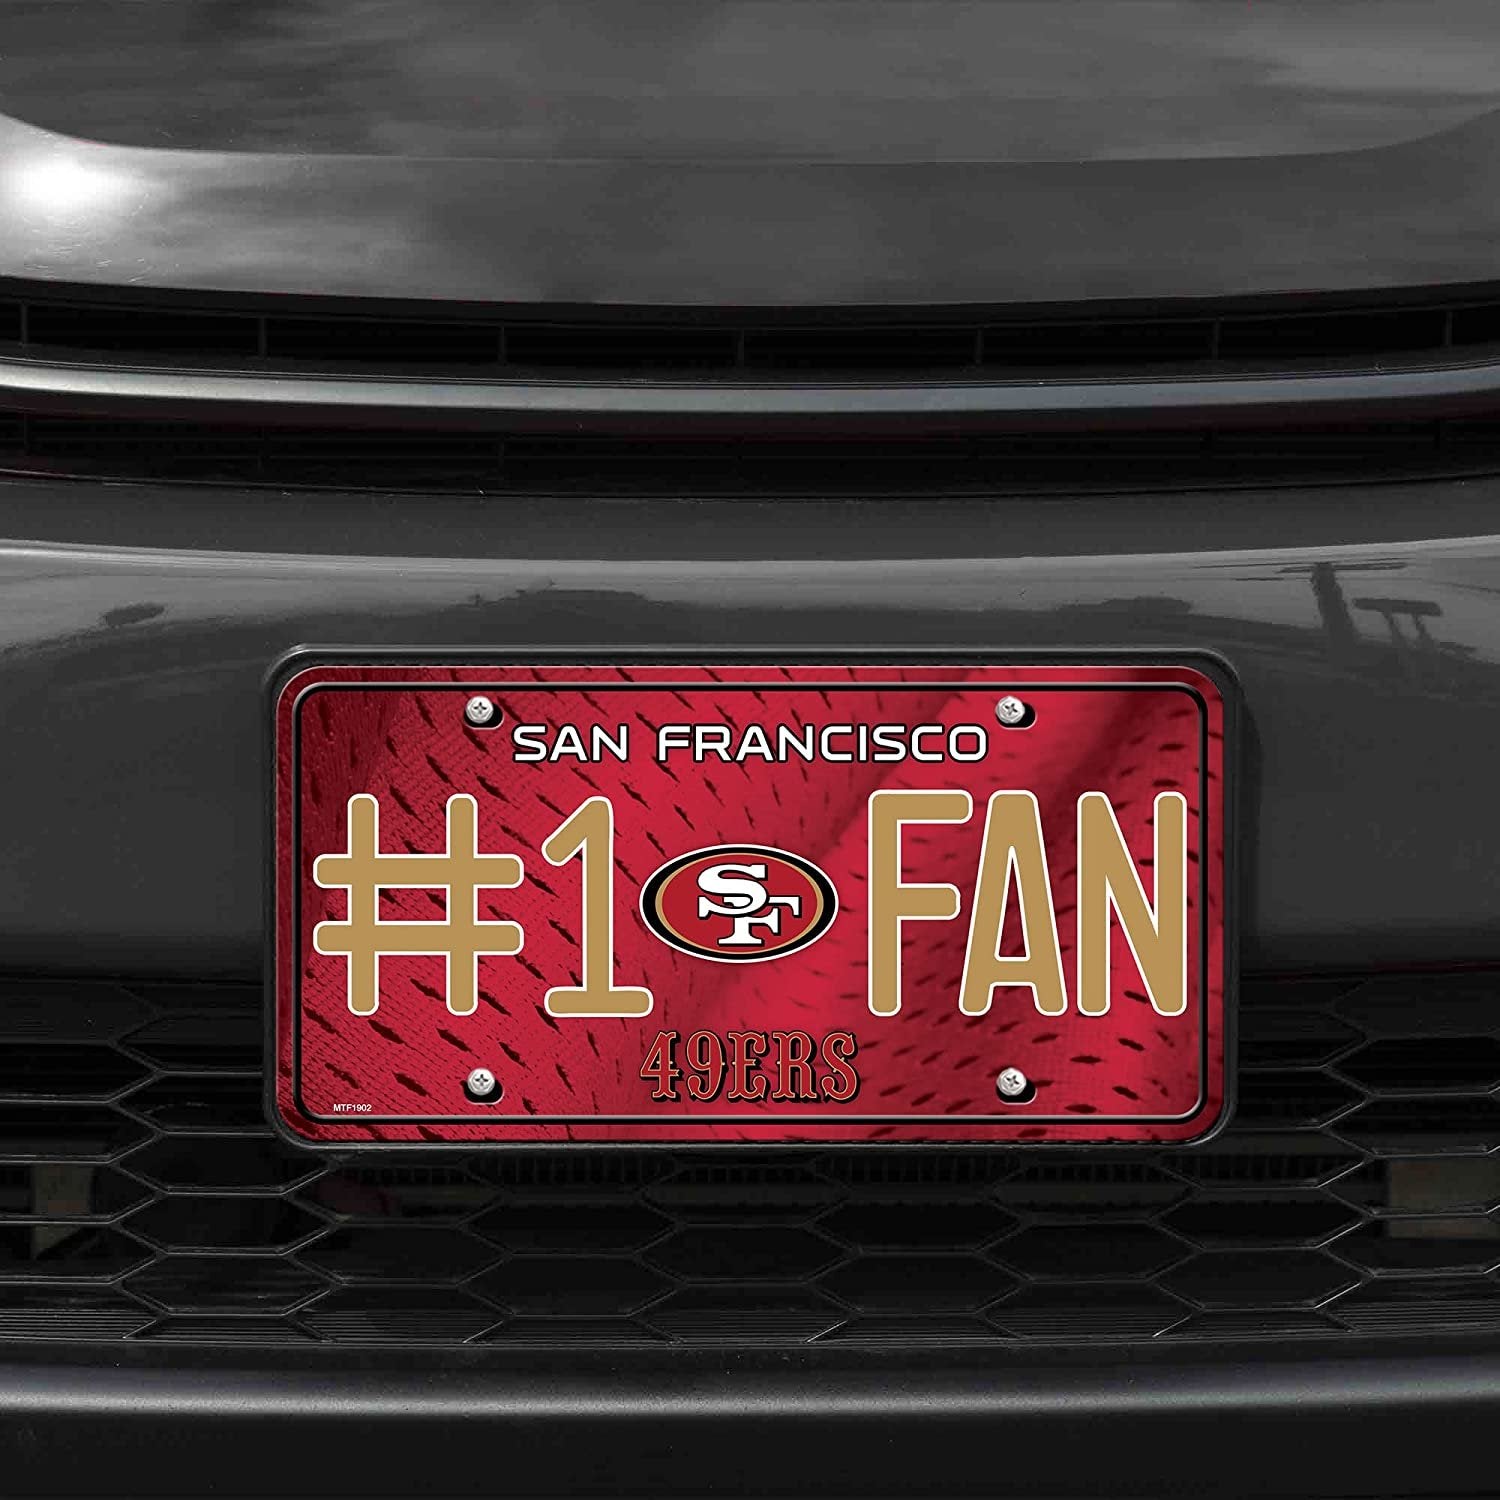 San Francisco 49ers Metal Auto Tag License Plate, #1 Fan Design, 12x6 Inch